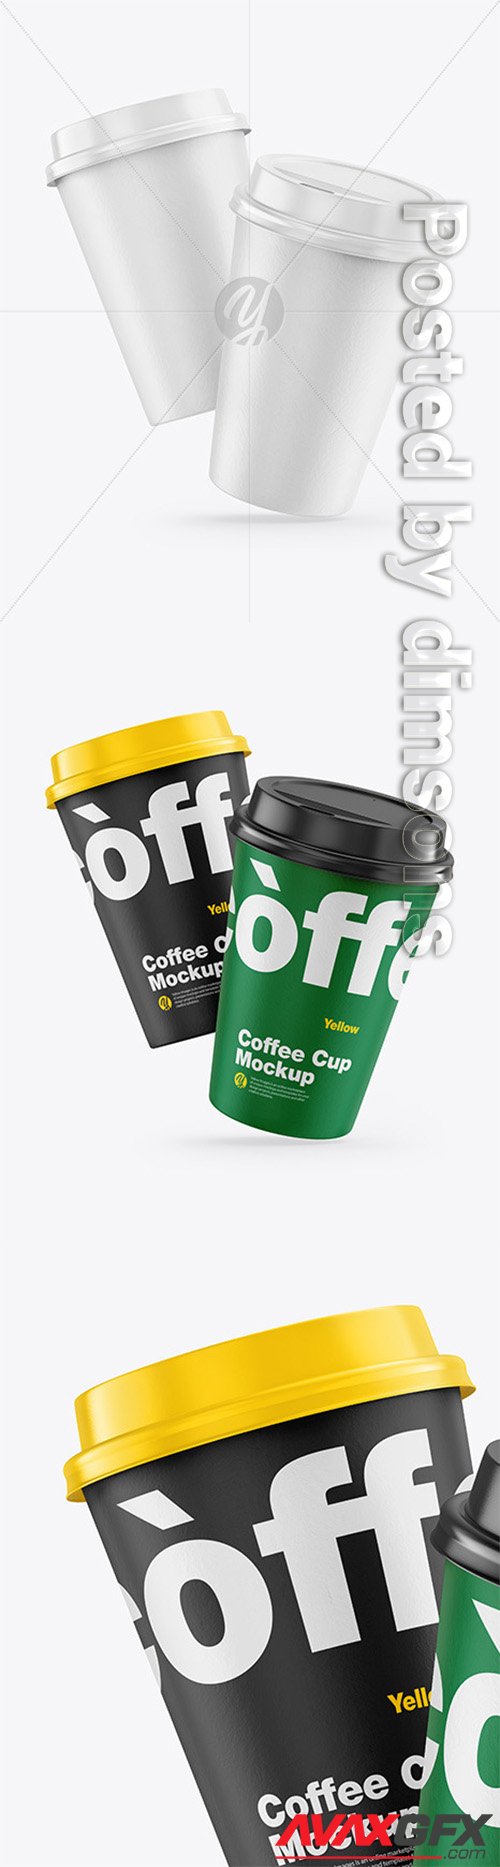 Paper Coffee Cups Mockup 66137